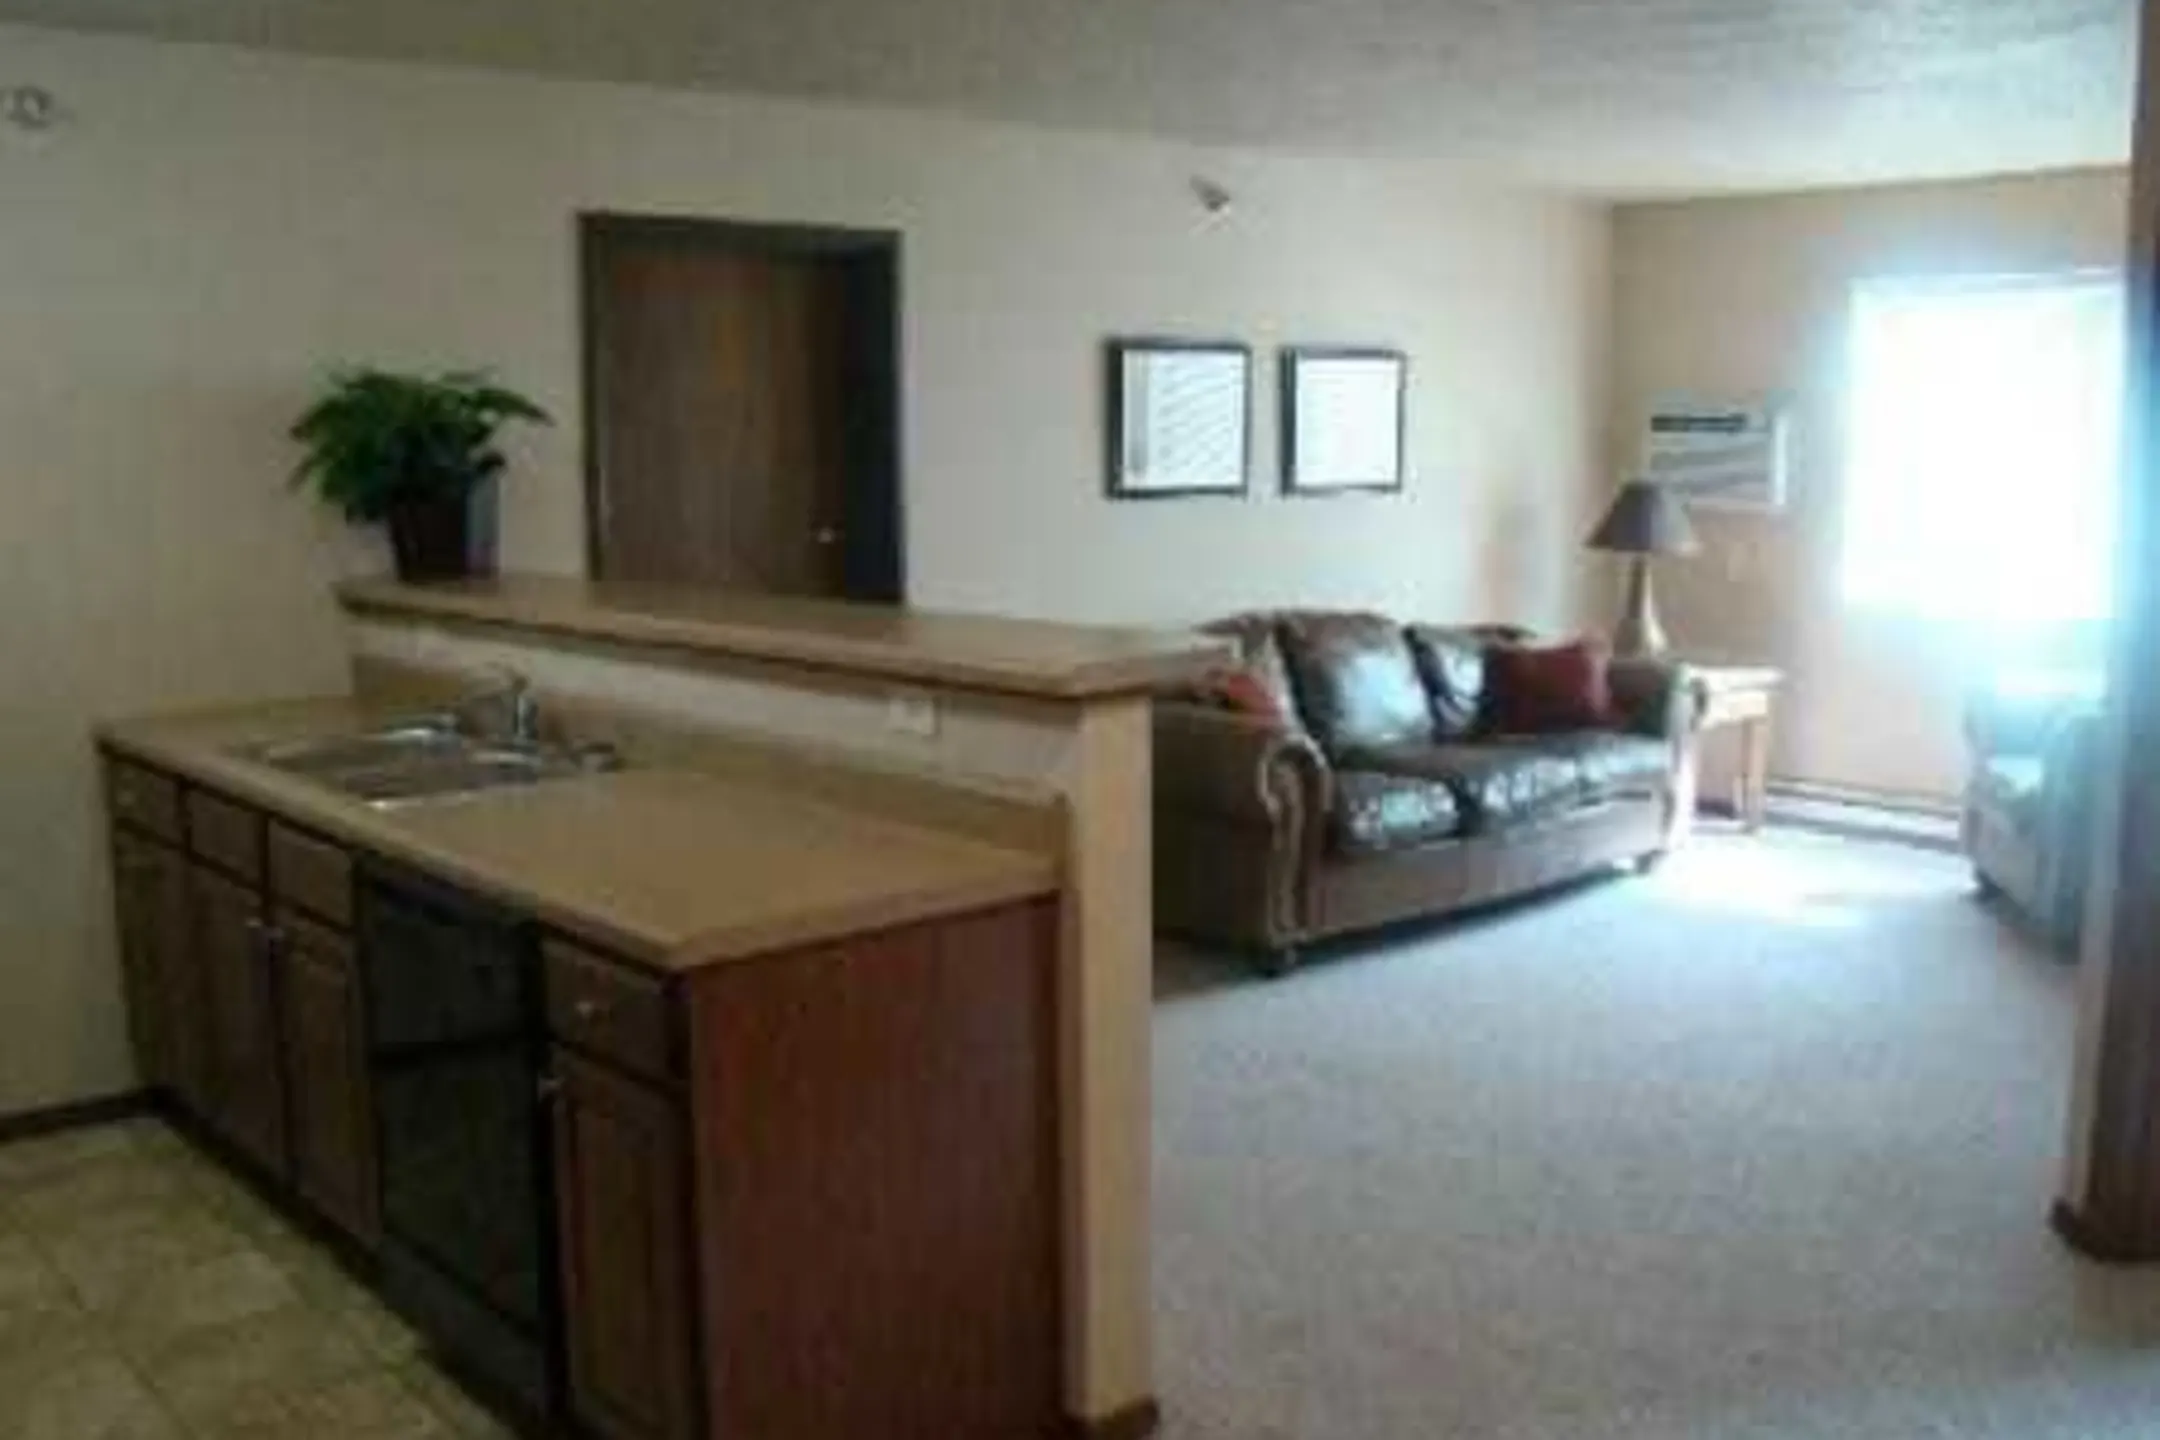 Mirada Manor Apartments - Sioux Falls, SD